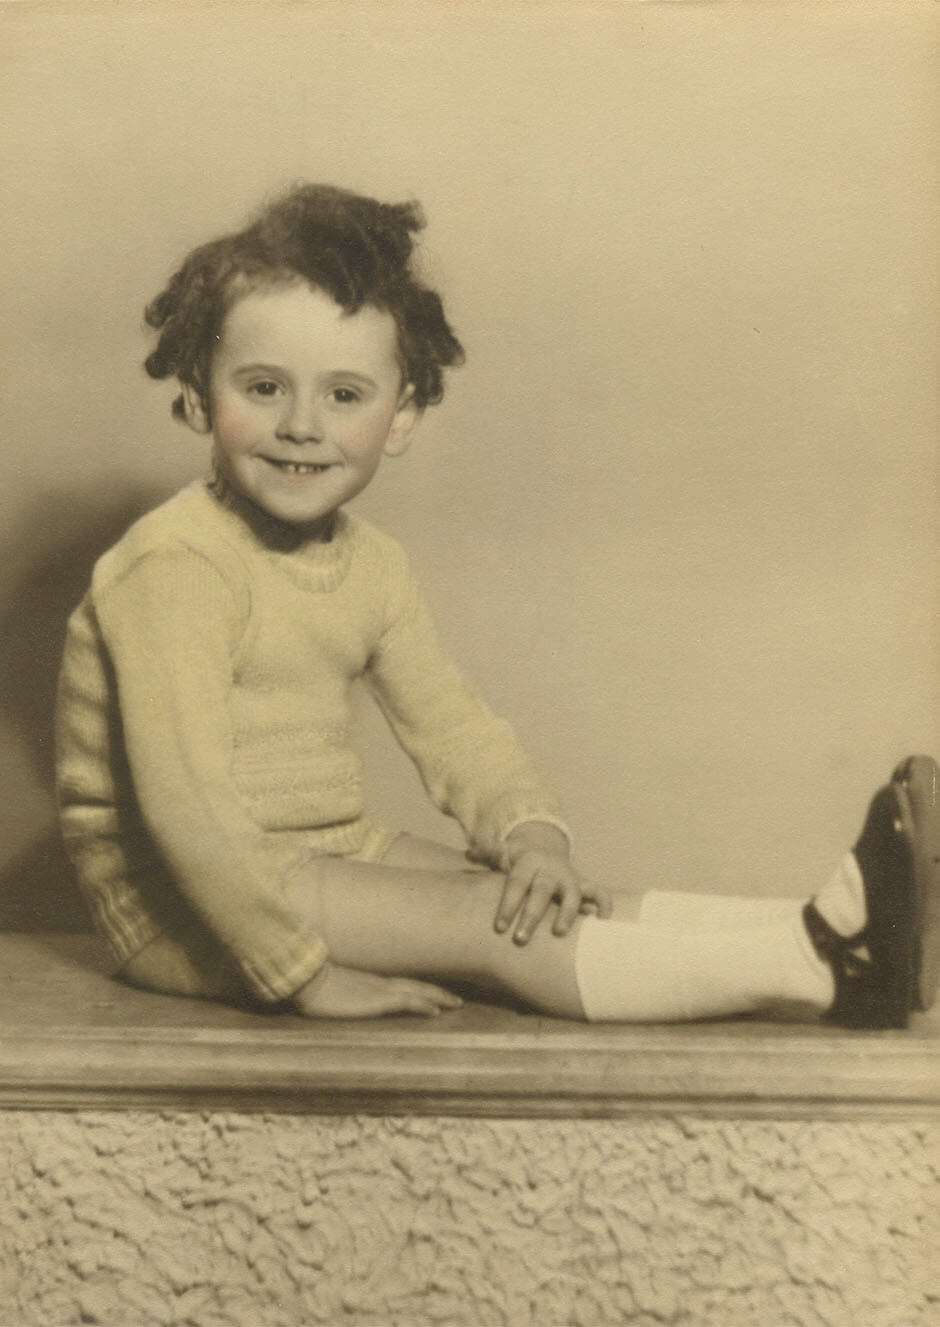 Art Canada Institute, three-year-old Yves Gaucher in 1937